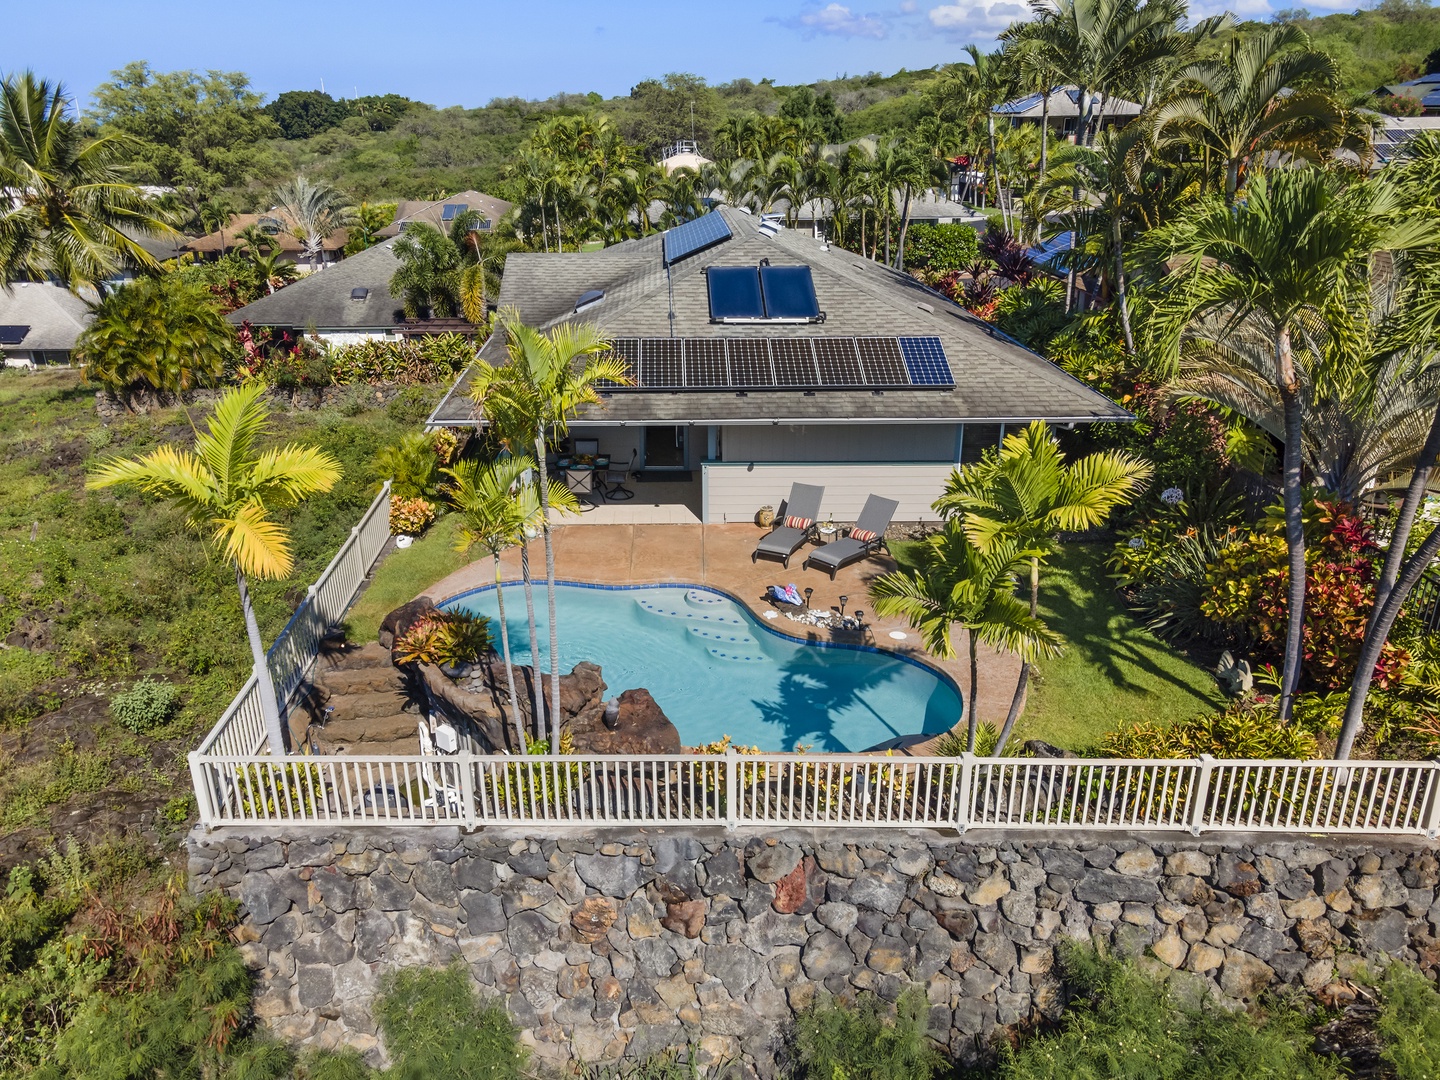 Kailua Kona Vacation Rentals, Malulani Retreat - Aerial views of this phenomenal property